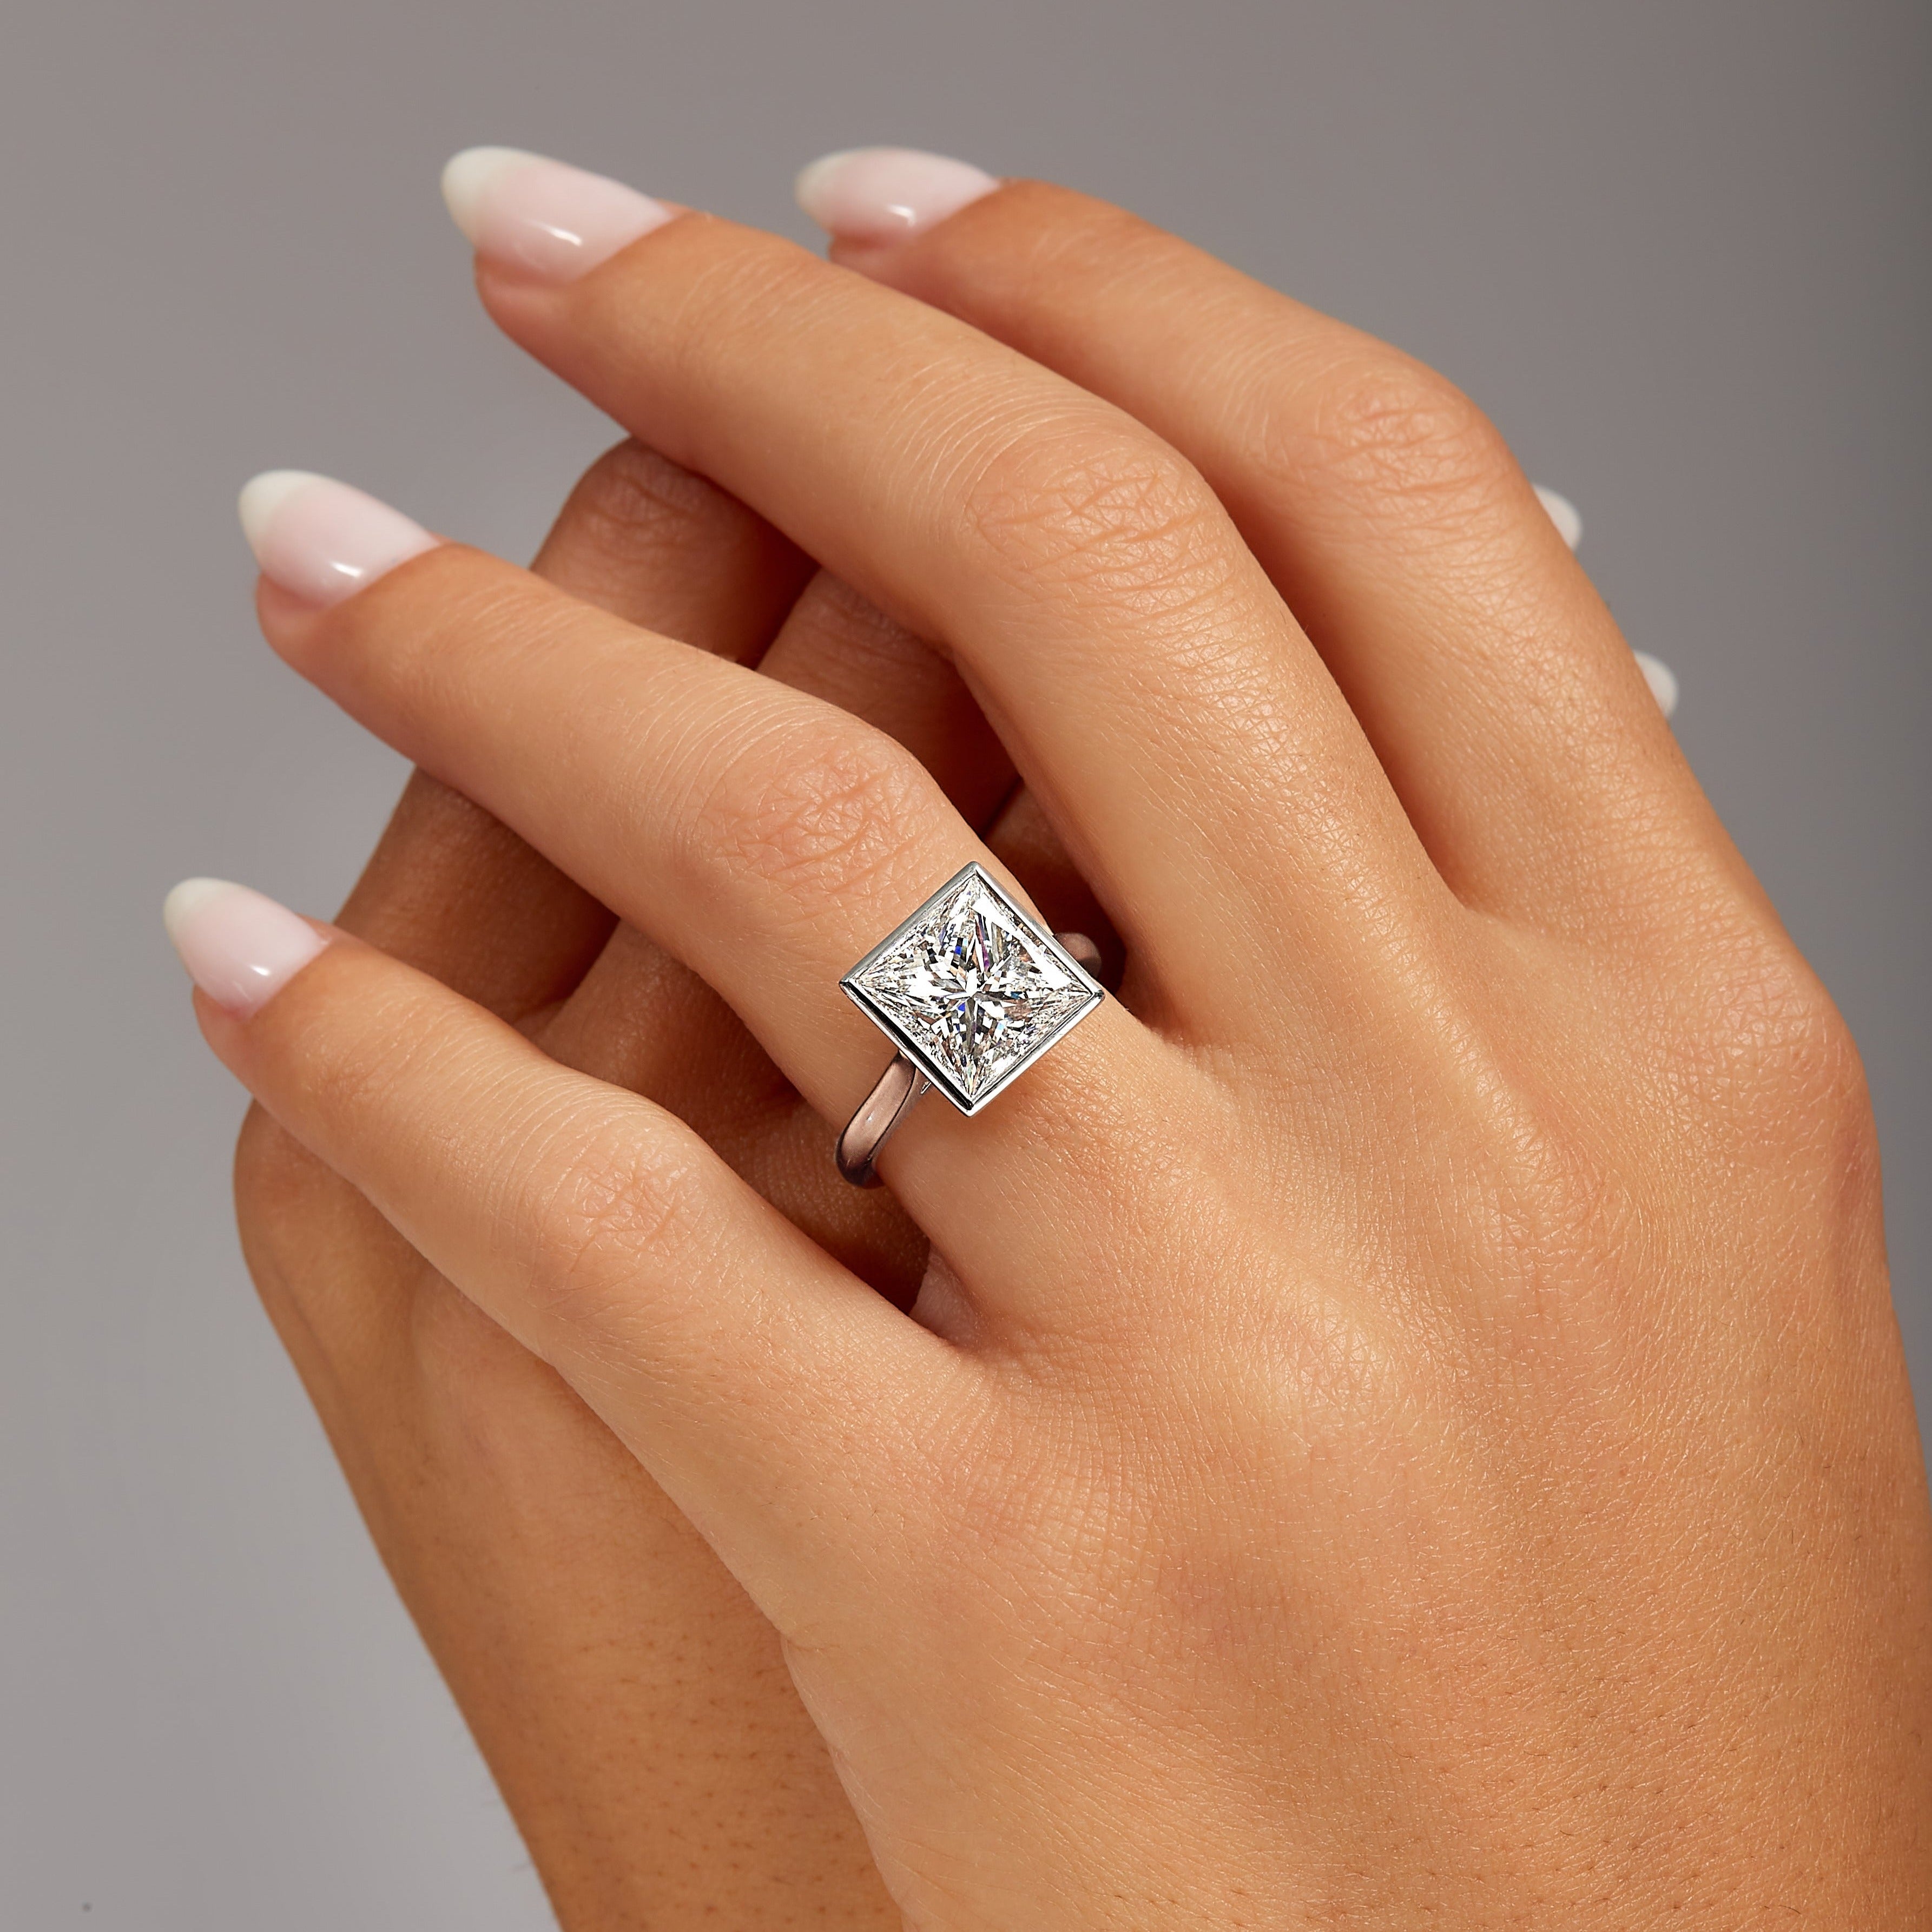 4.78ct Princess Cut Diamond Bezel Set Ring in Platinum Band, GIA Certified